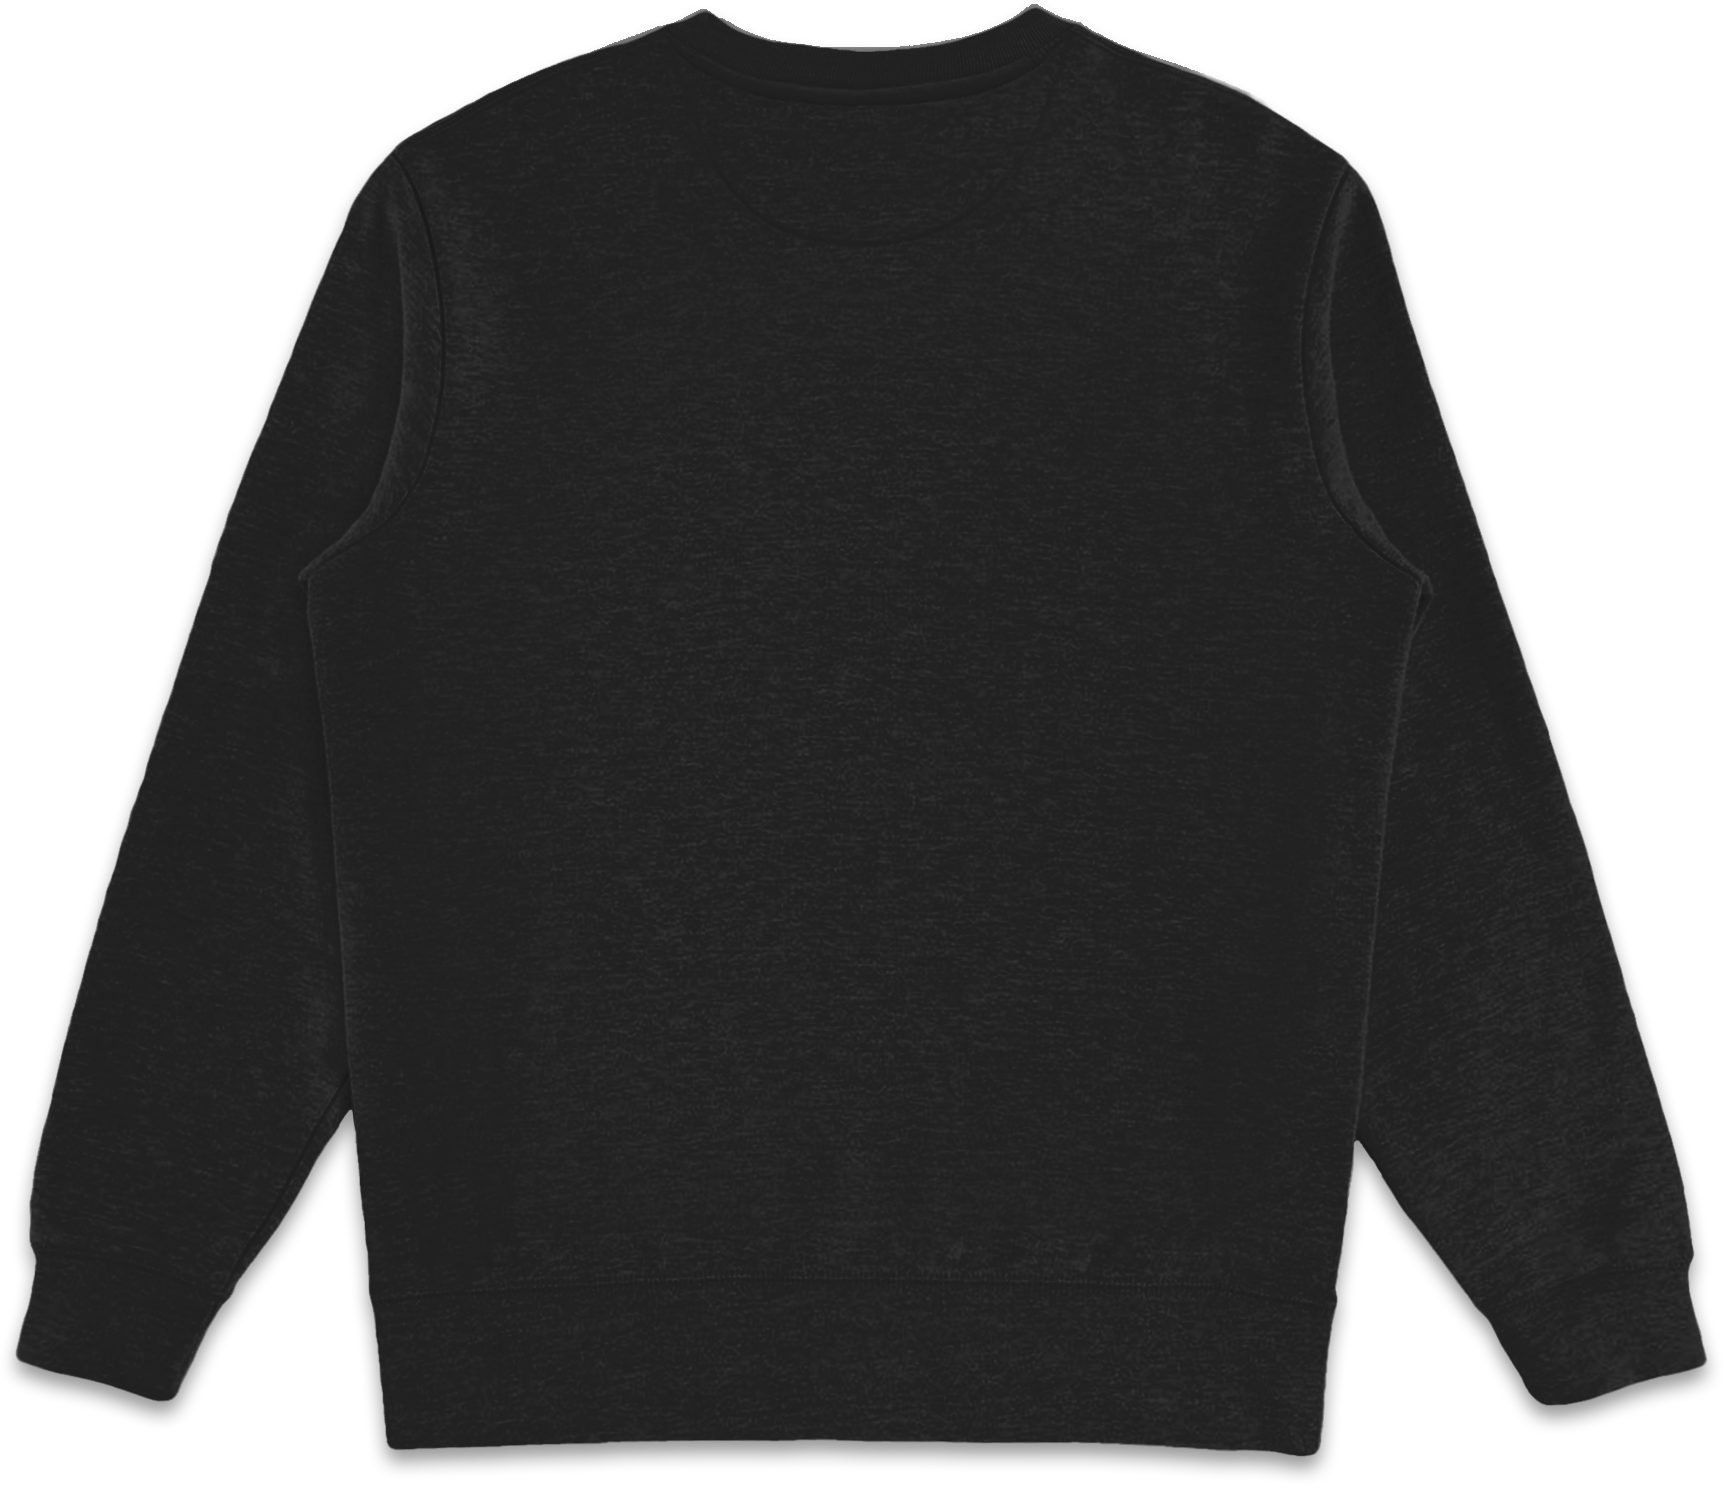 Frank Ocean Nostalgia Graphic Crewneck Sweatshirt